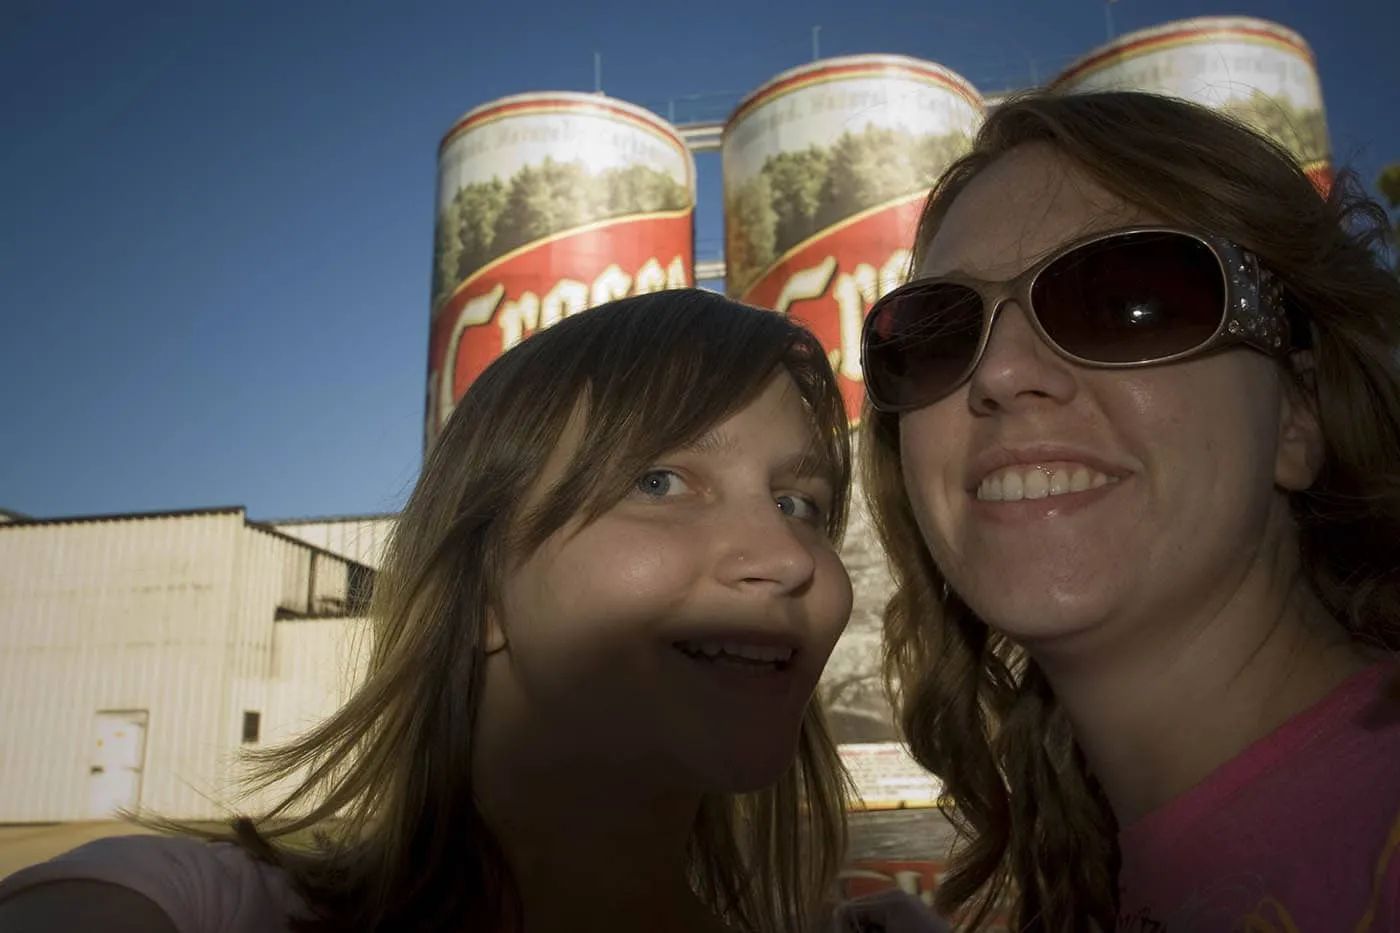 World's Largest Six-Pack of Beer, a roadside attraction in La Crosse, Wisconsin